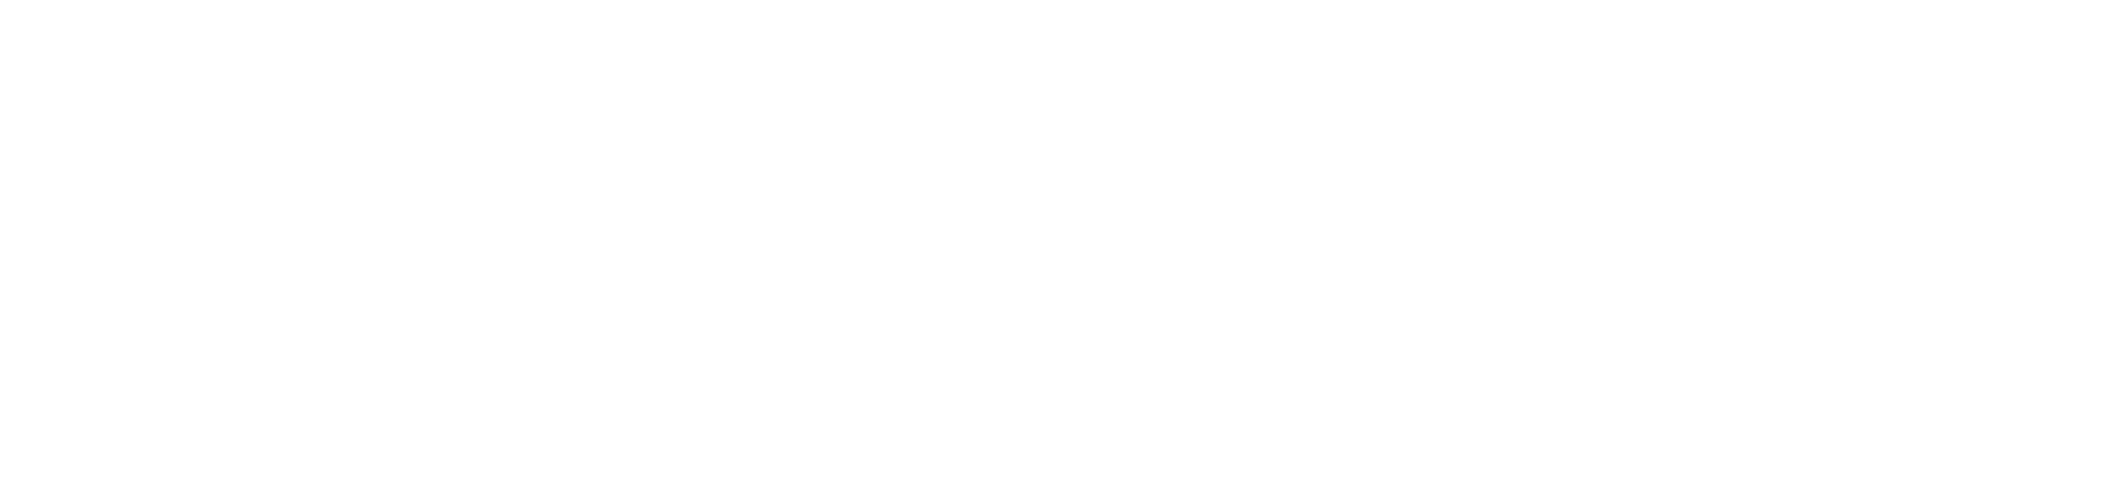 Factinsect logo